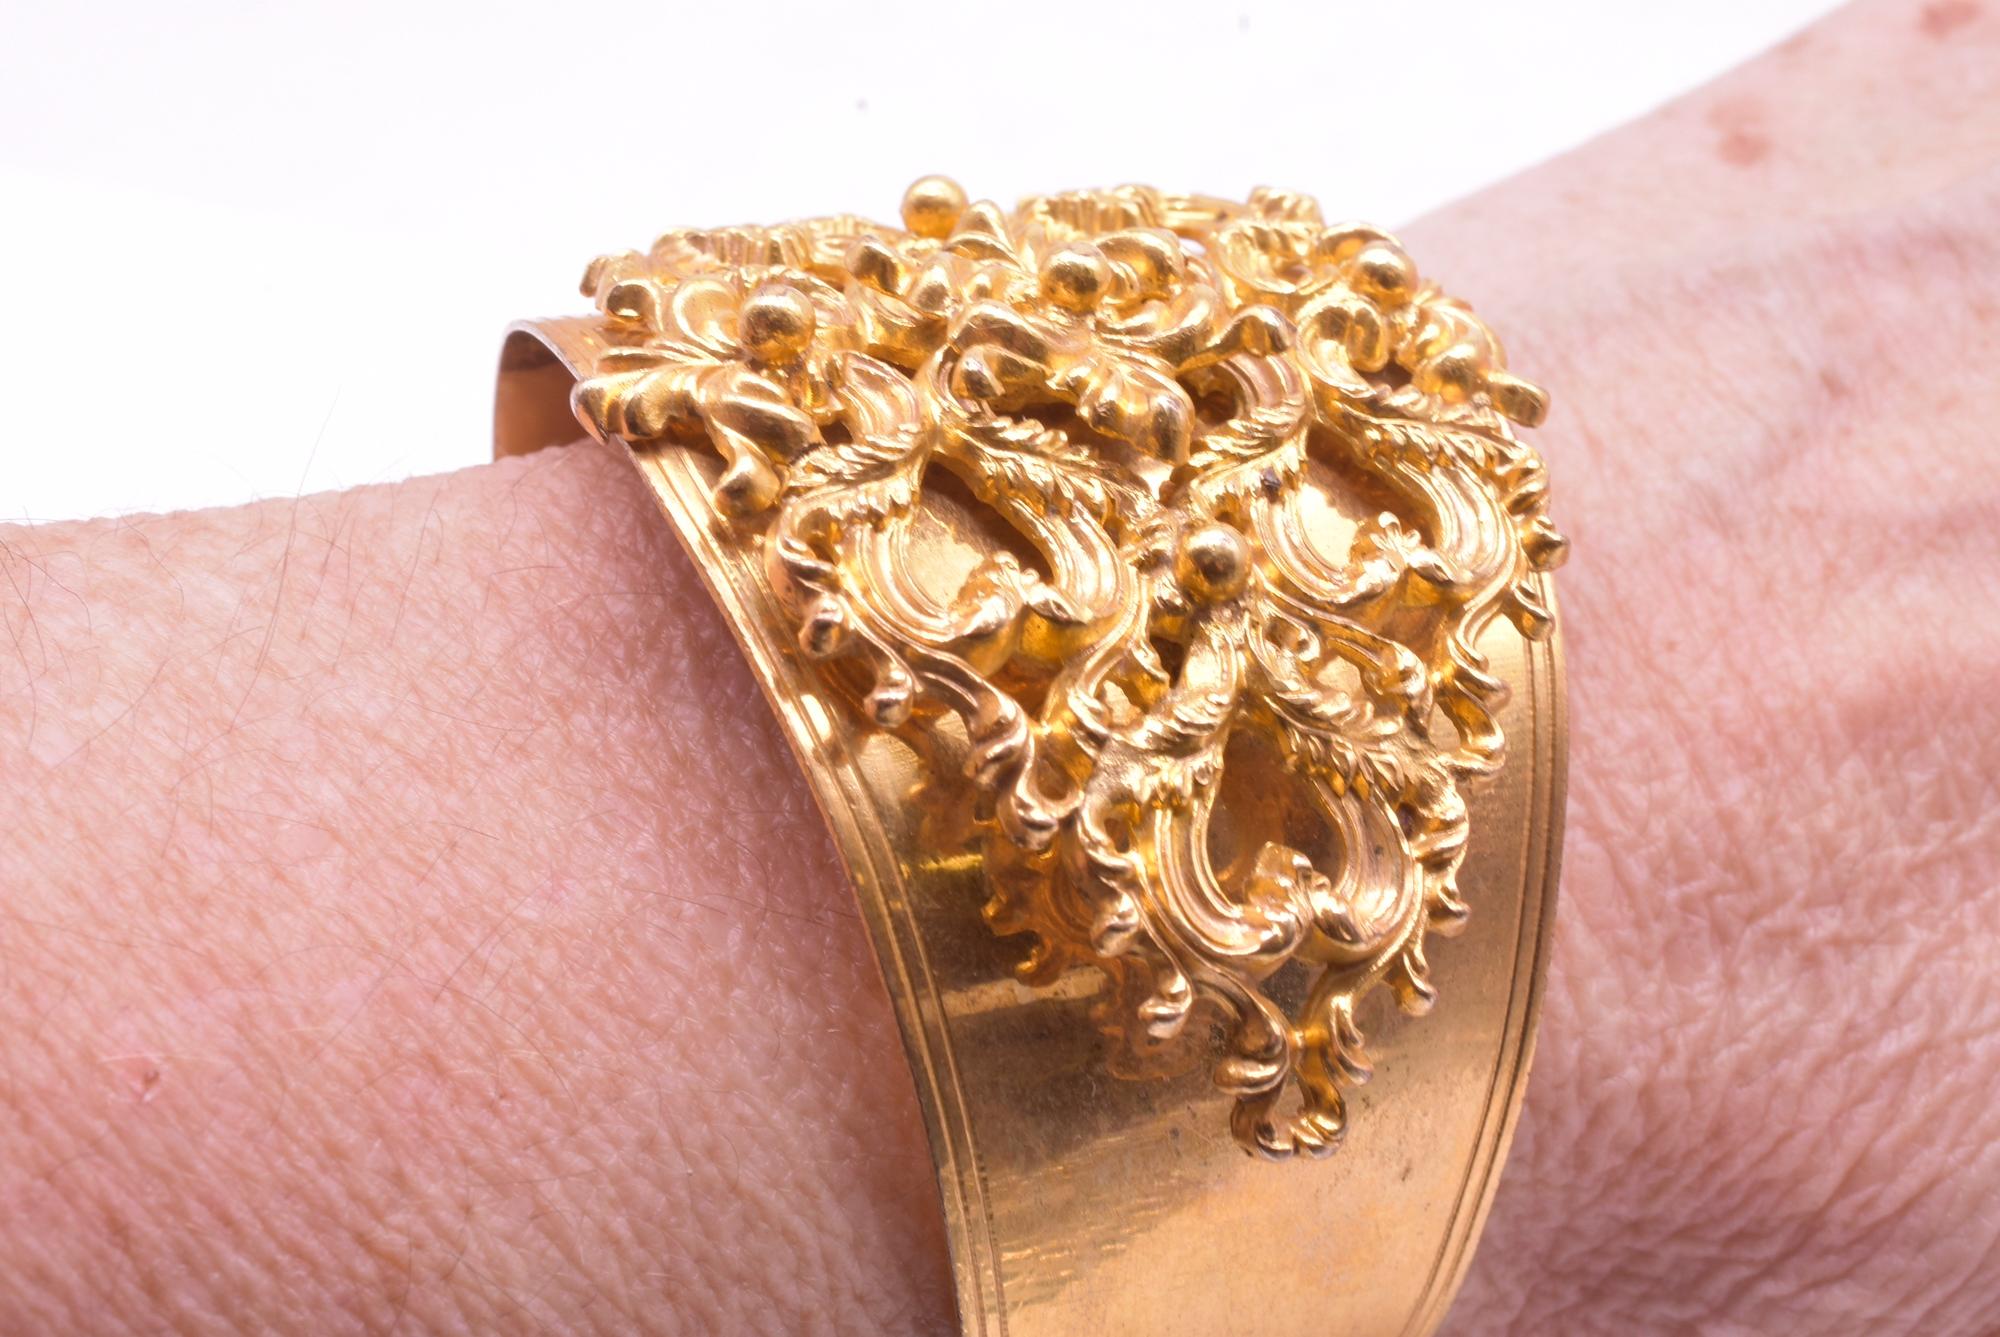 Georgian Metal Cuff Bracelet with Ornate Ornamentation For Sale 1